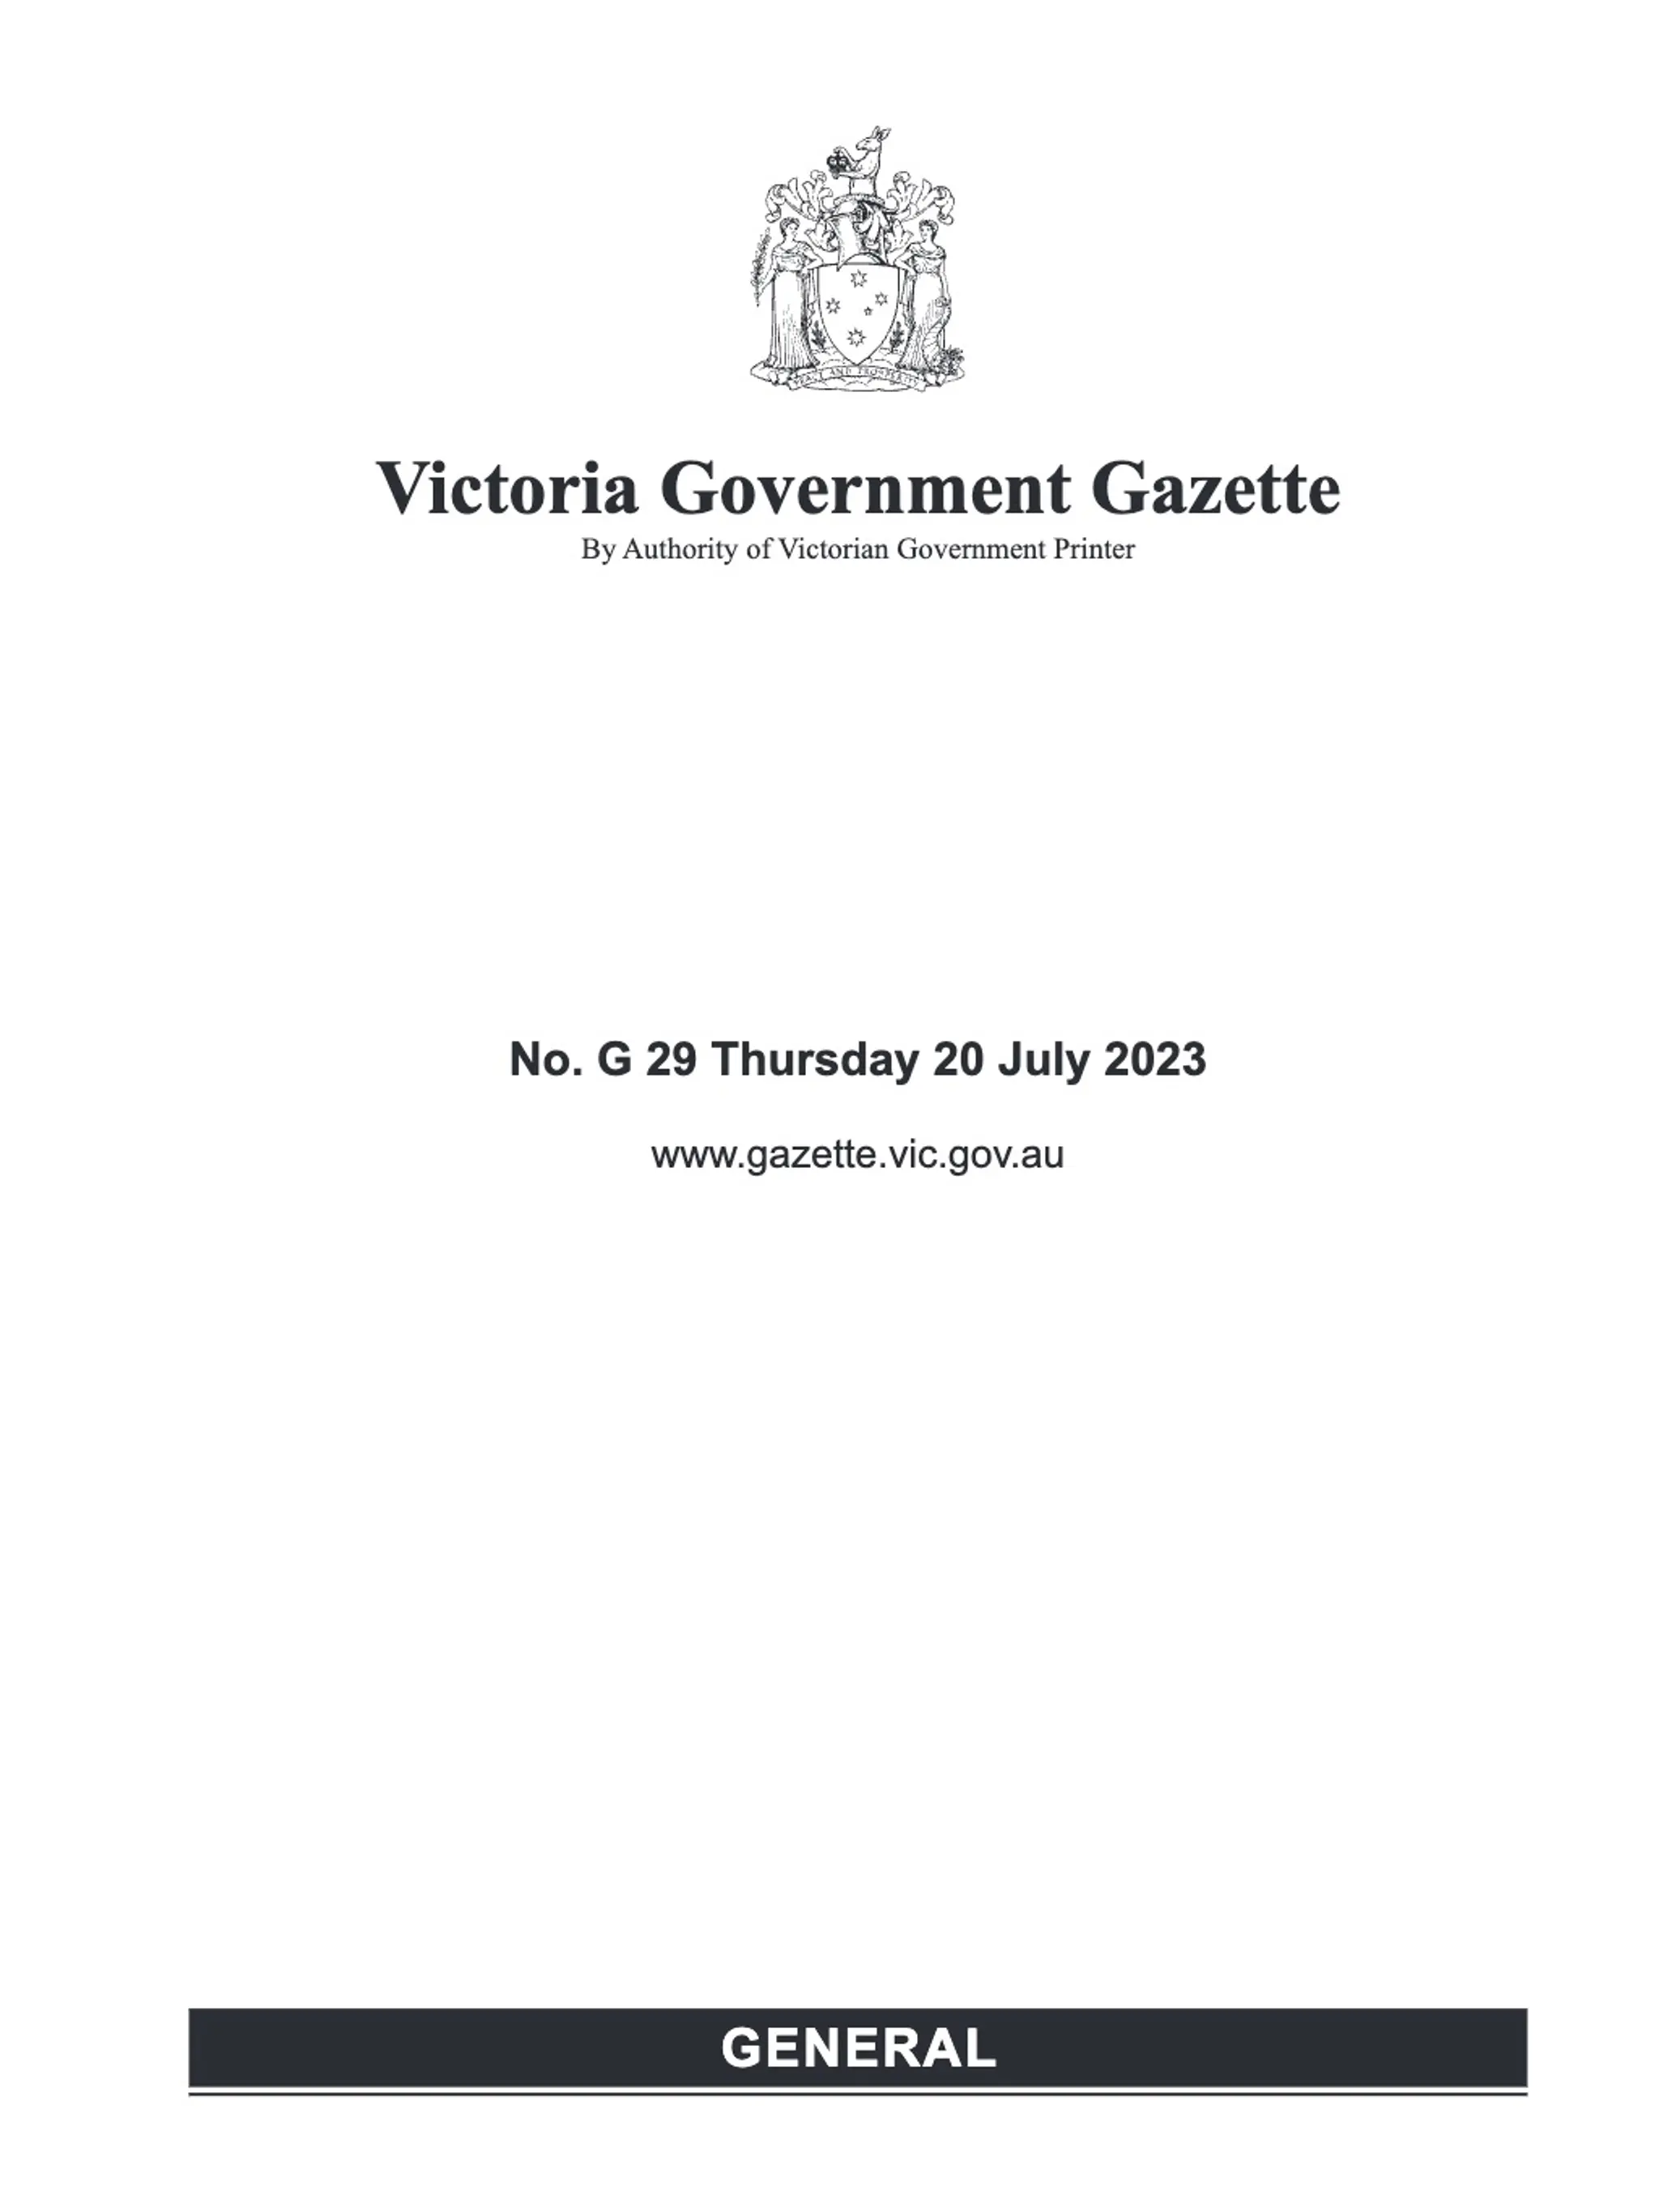 Victoria Government Gazette - Basic Sample Conversion